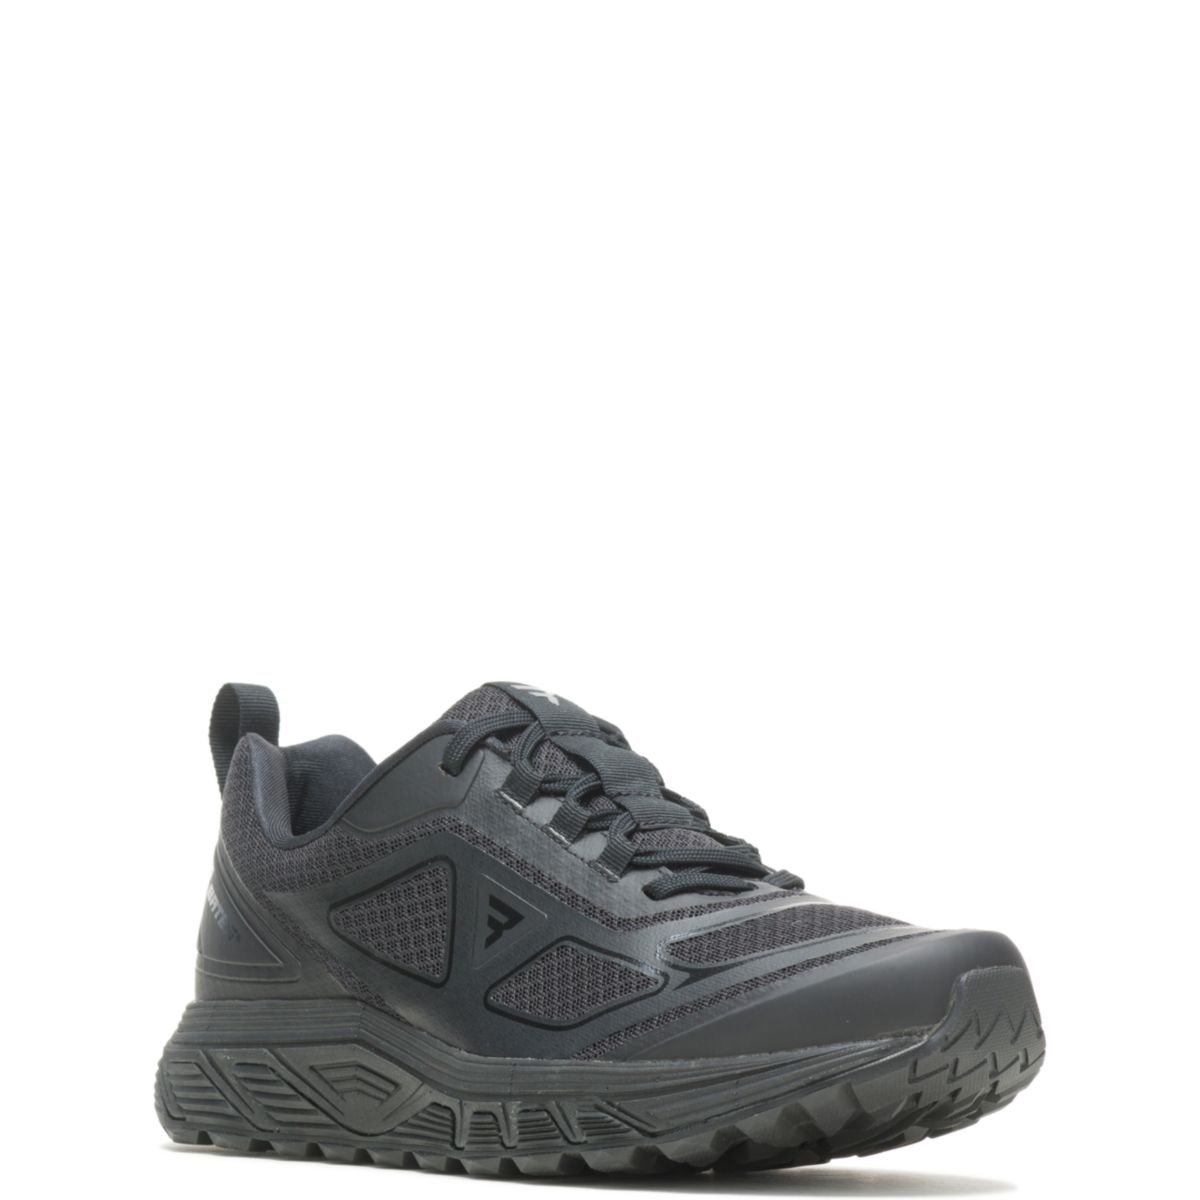 Bates Men's Rush Low Slip Resistant Work Shoe Black - E01030 BLACK - BLACK, 8.5